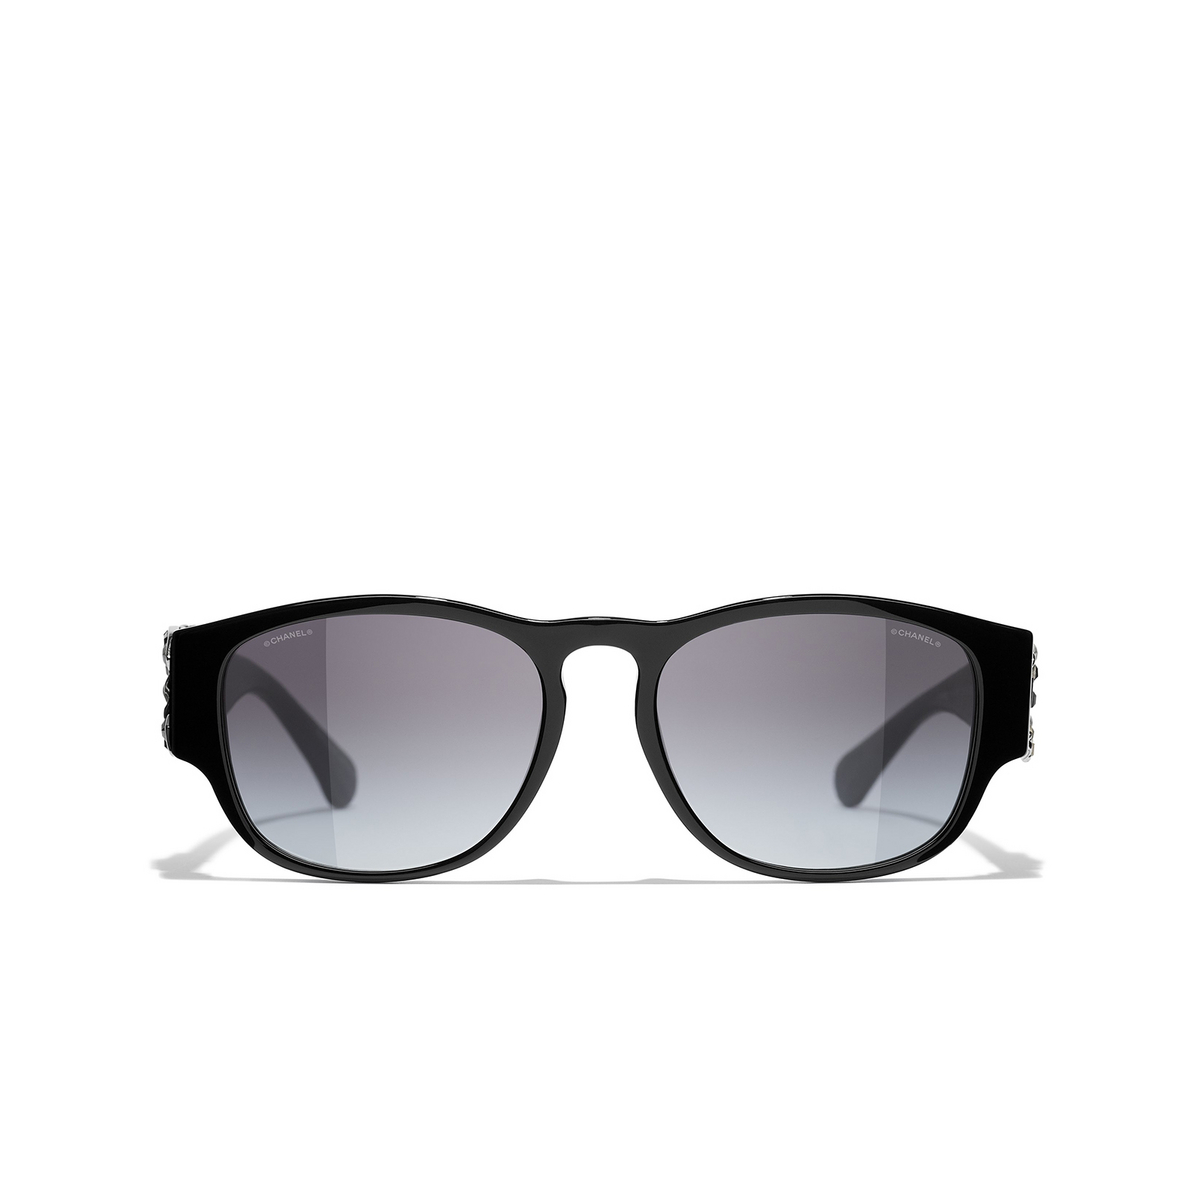 CHANEL rectangle Sunglasses C501S6 Black - front view